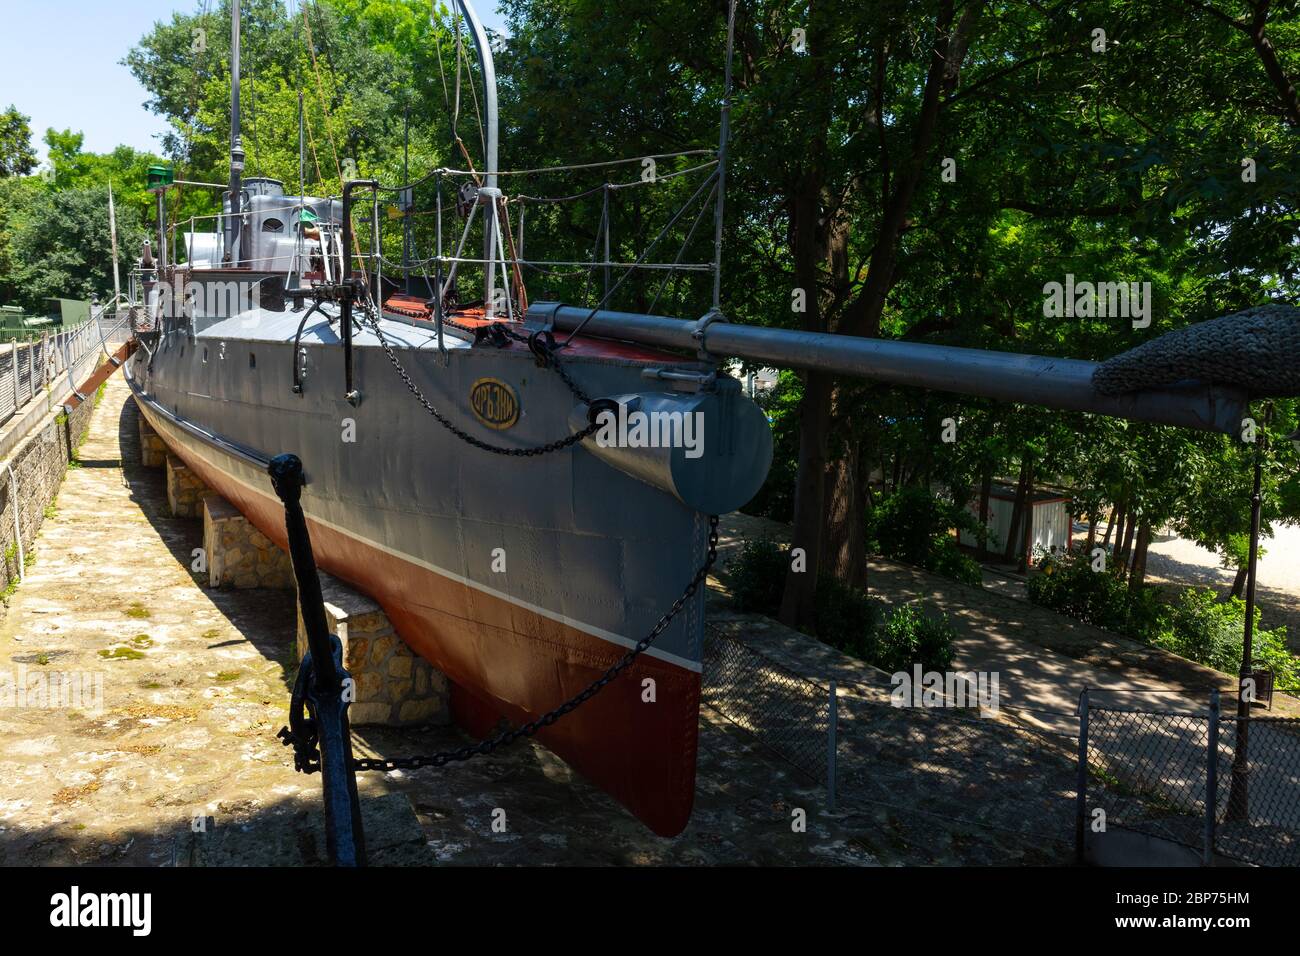 VARNA, BULGARIA - JUNE 26, 2019: Seaside Park. Bulgarian torpedo boat Drazki (Intrepid) built in the early 20th century. Front view. Stock Photo